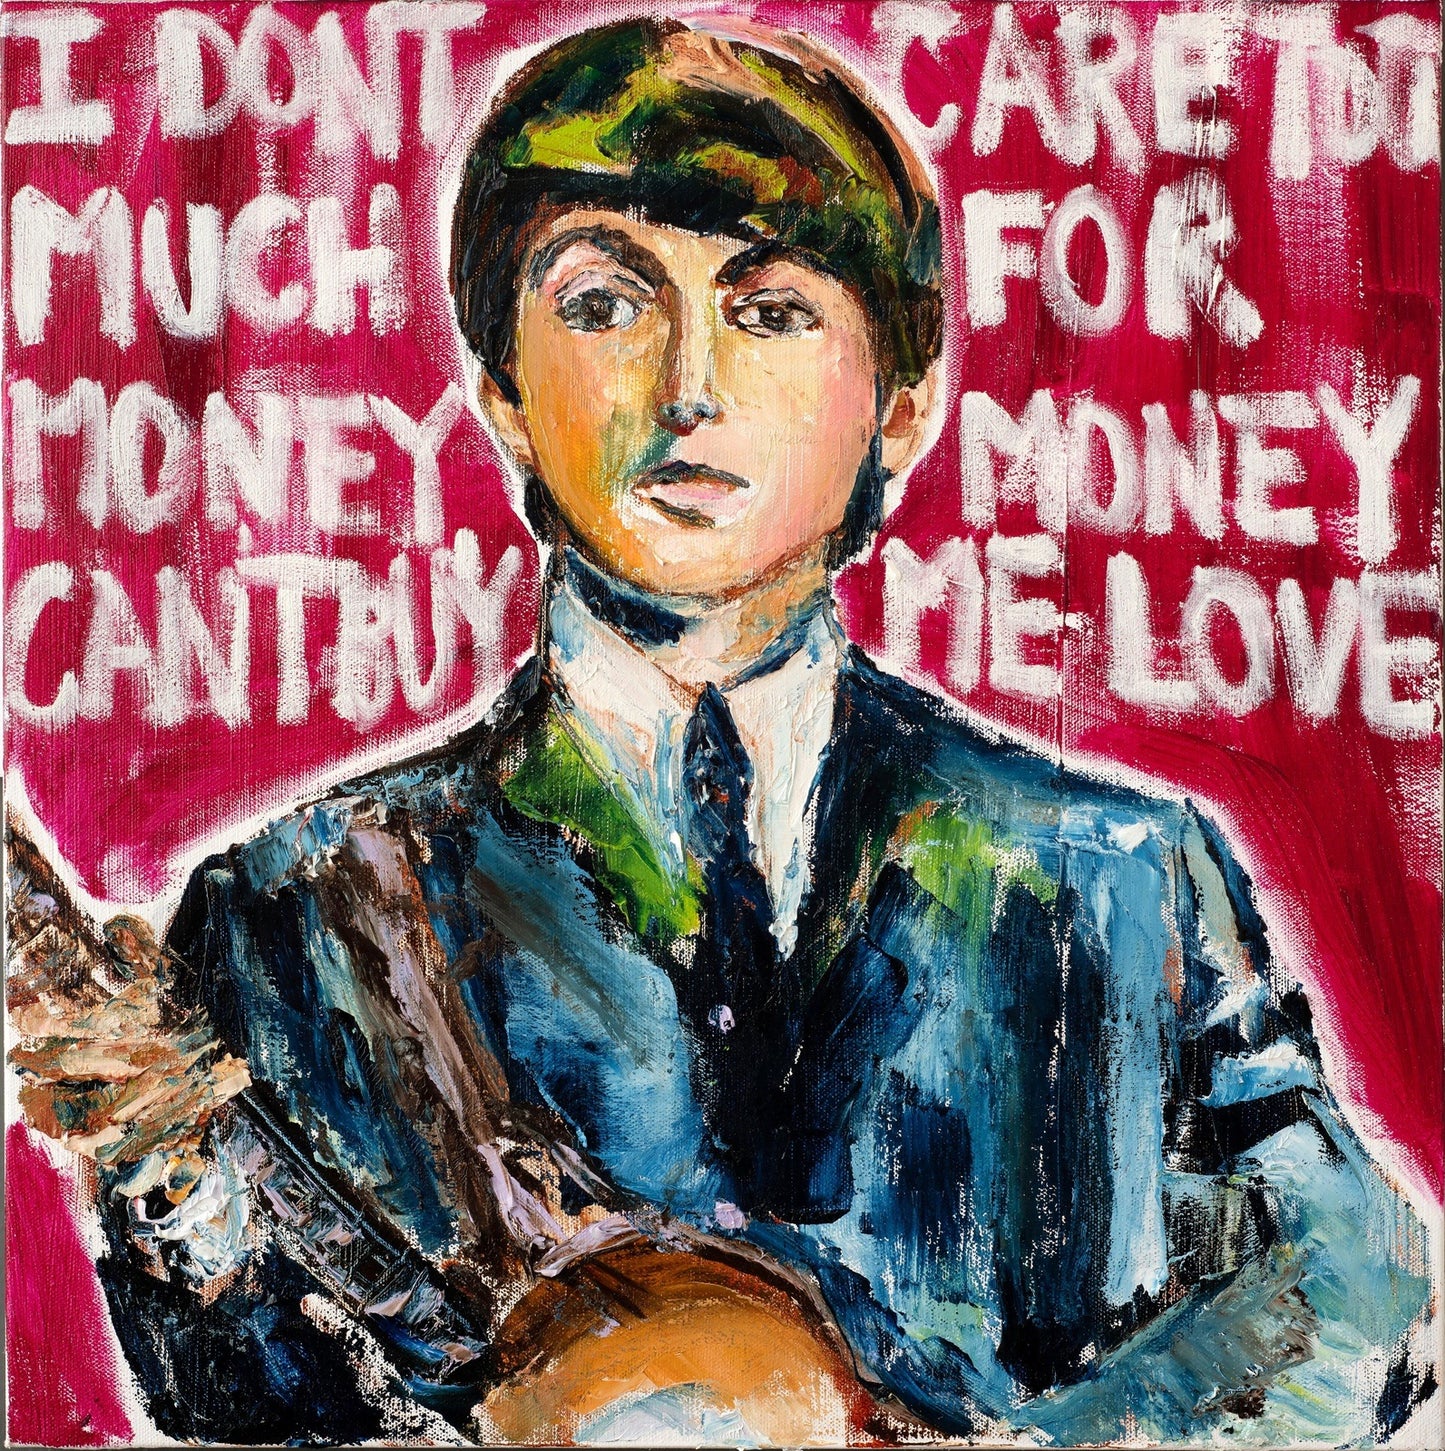 KPalm Fine Art Paul McCartney Print with lyrics in the background